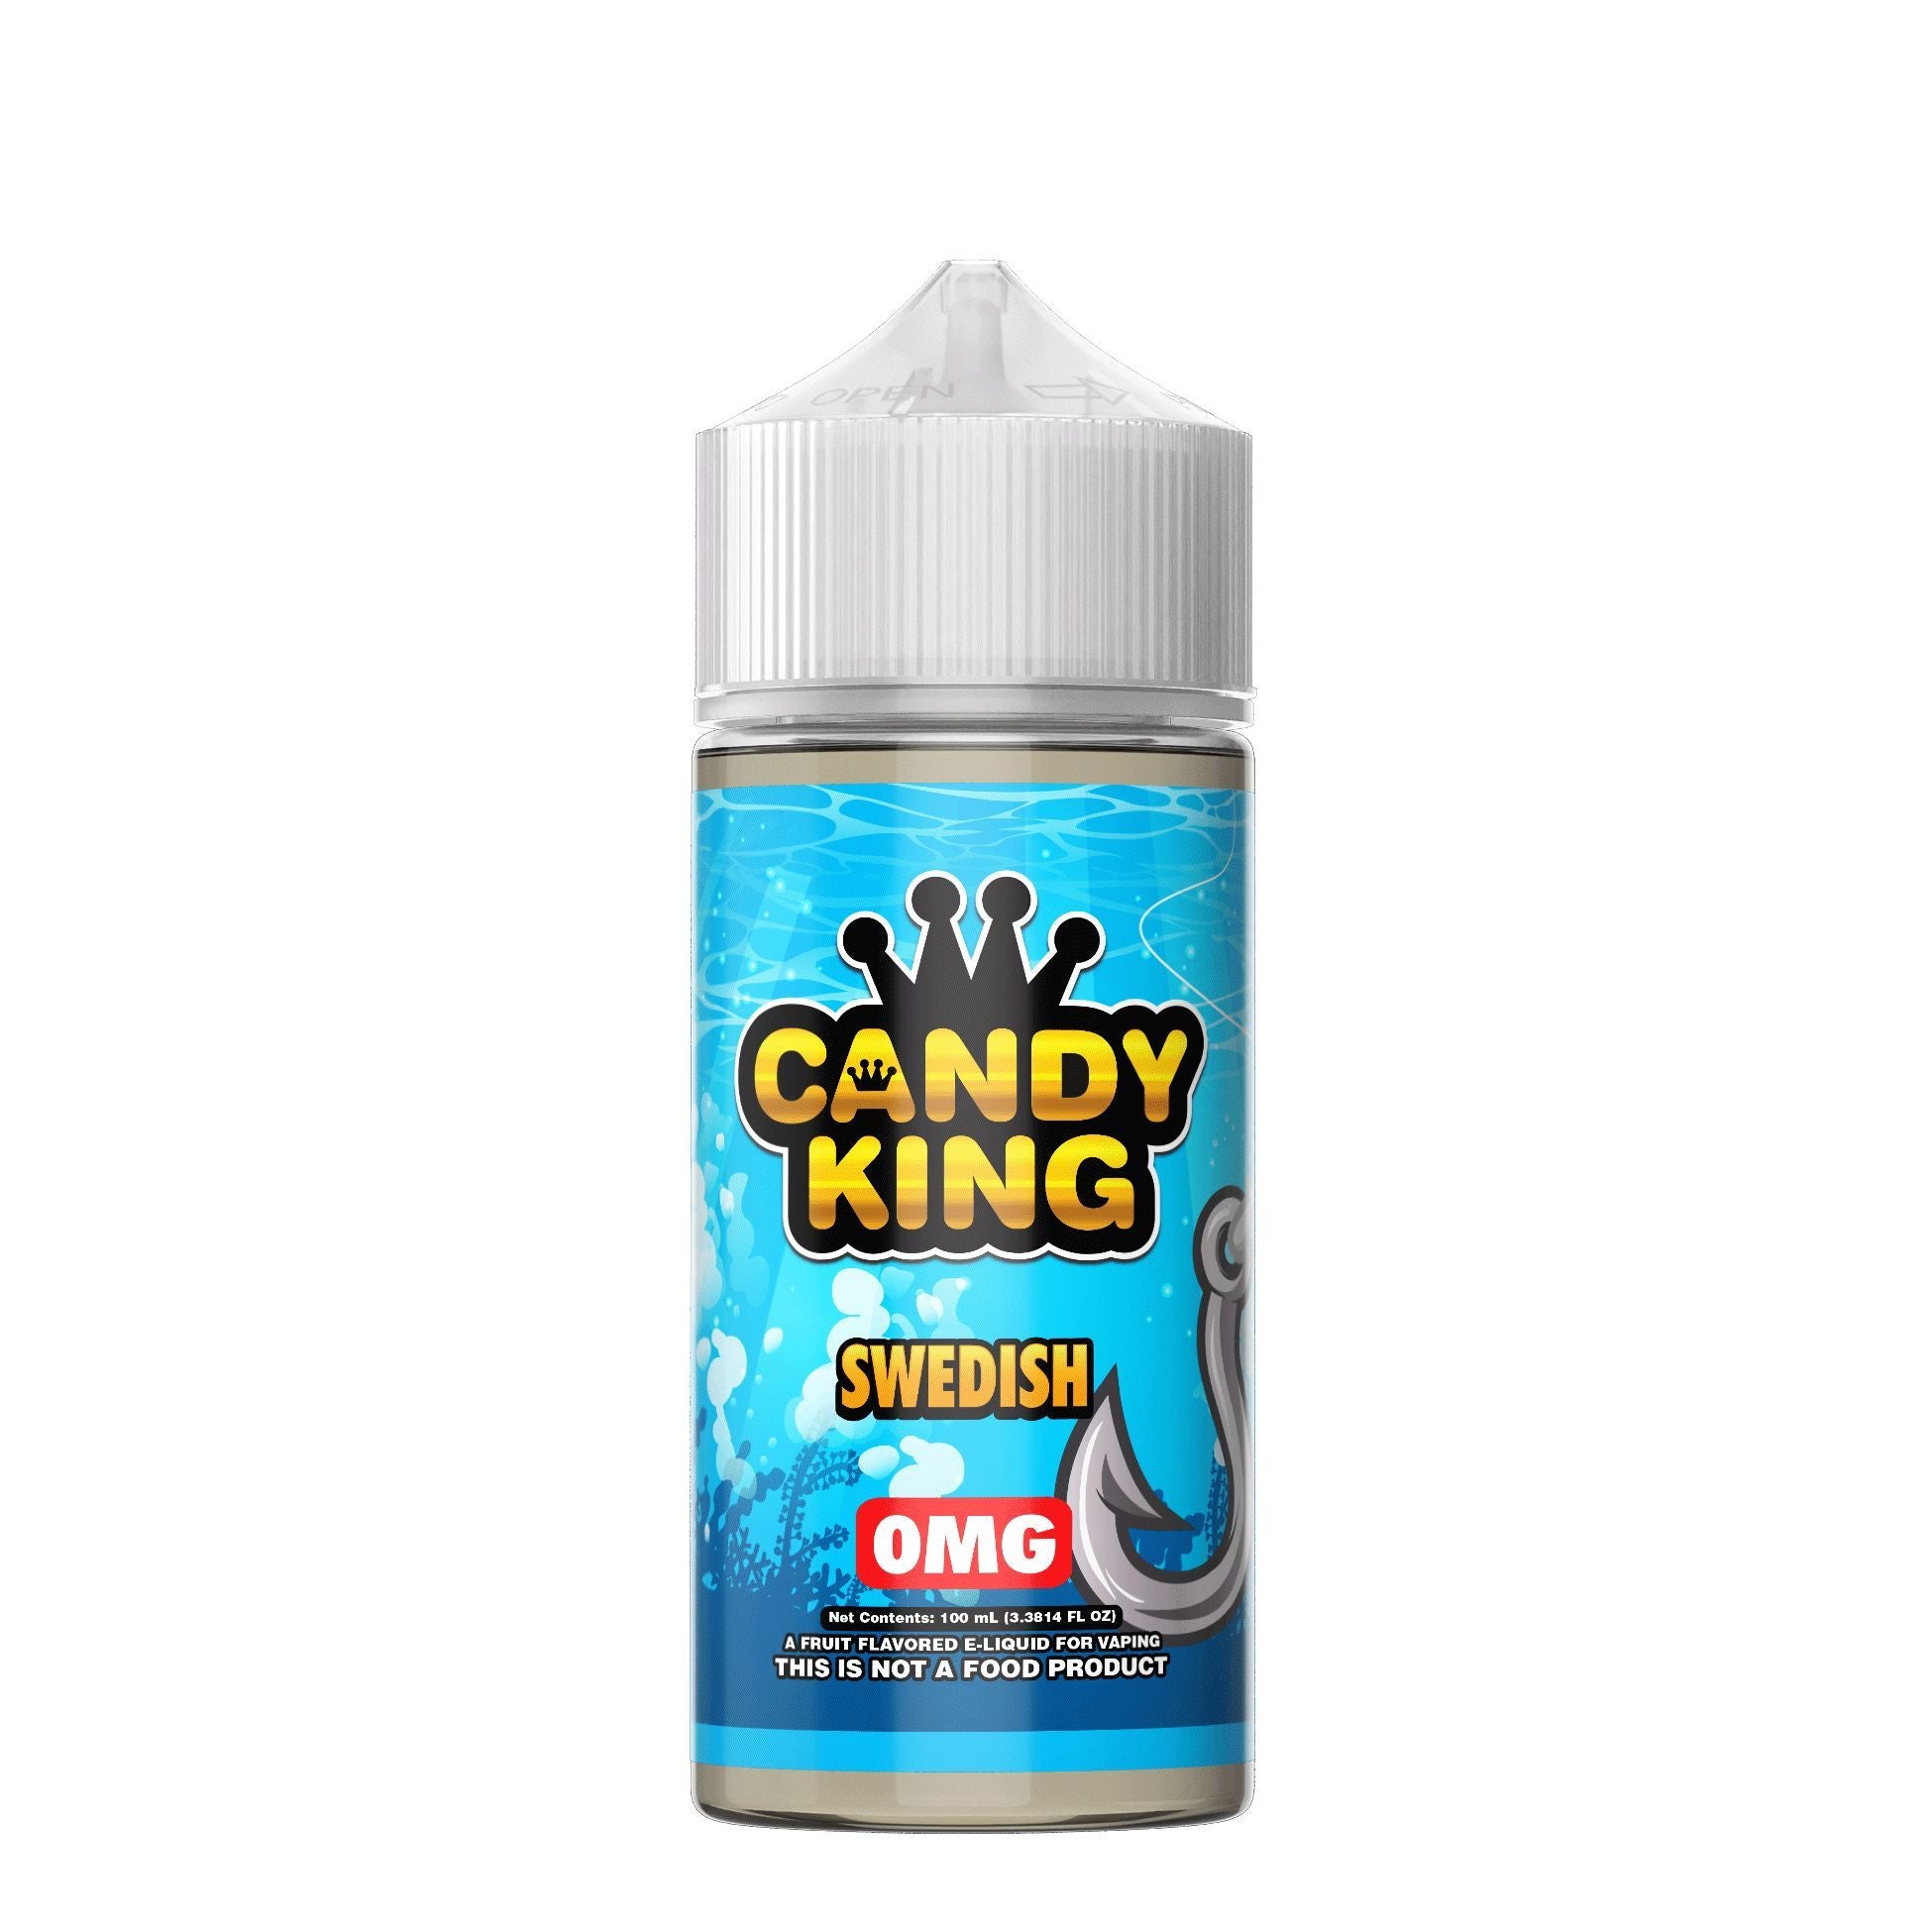 Candy king | 100ml | Swedish | Wholesale